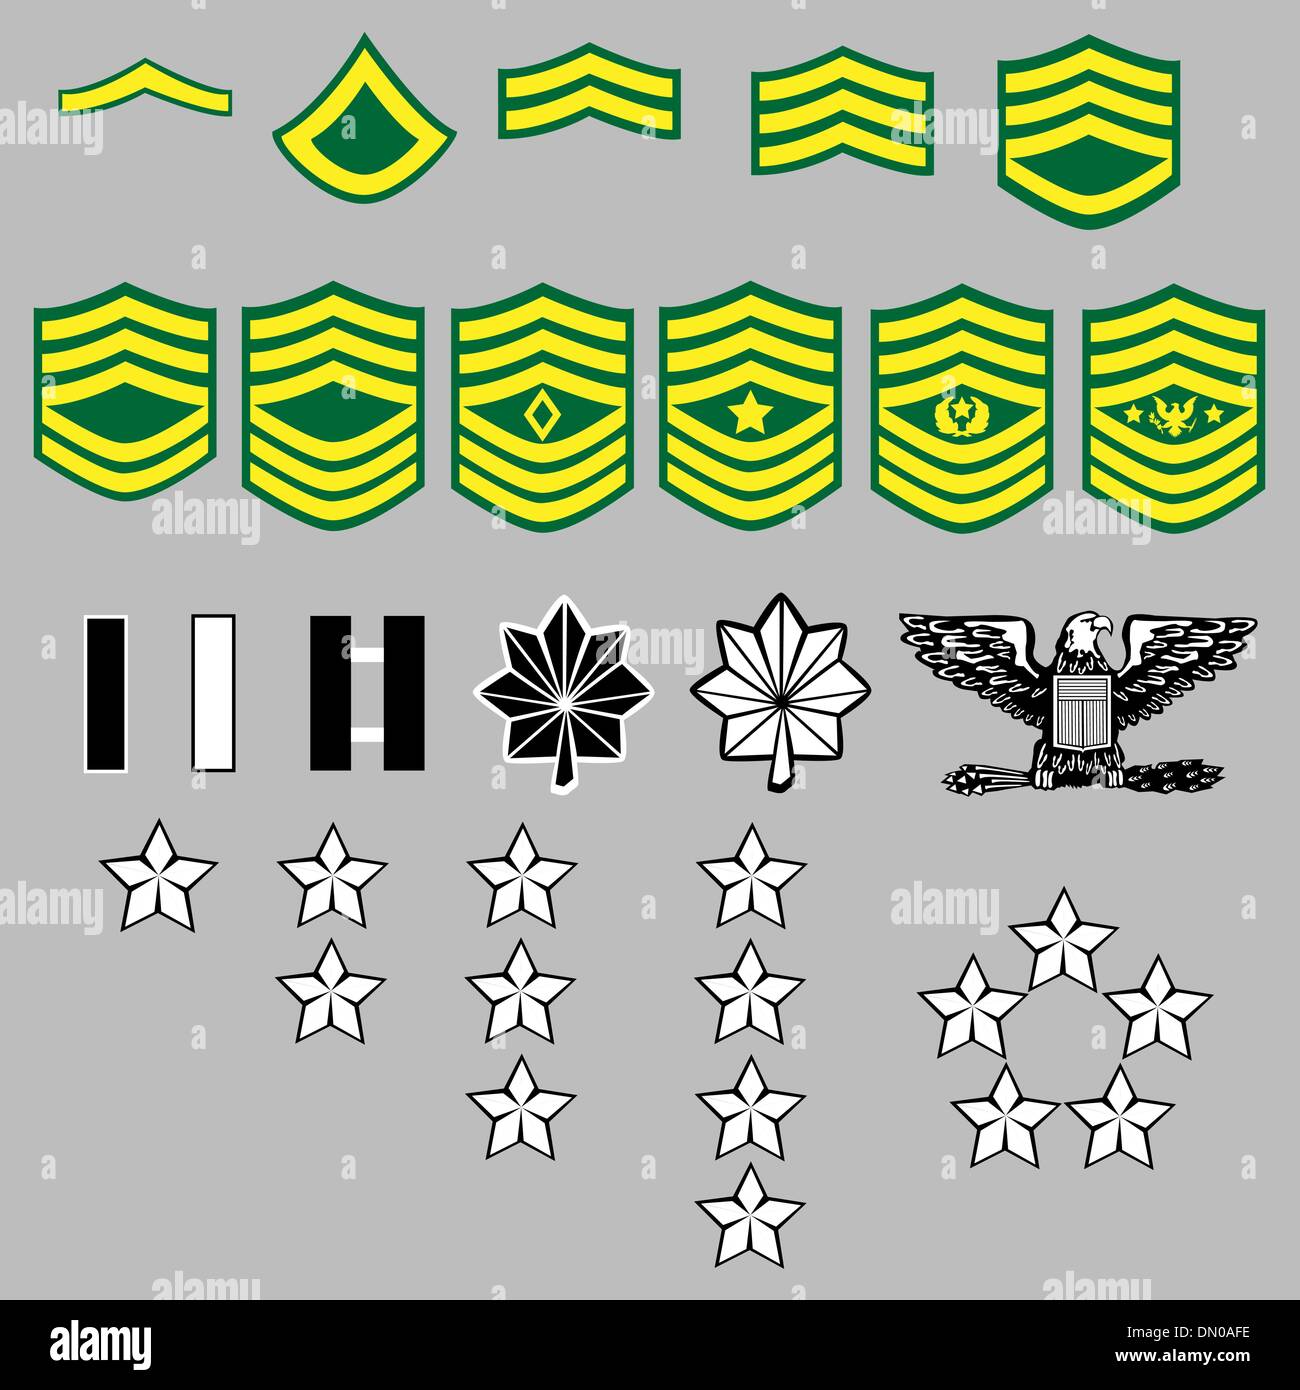 US Army rank insignia Stock Vector